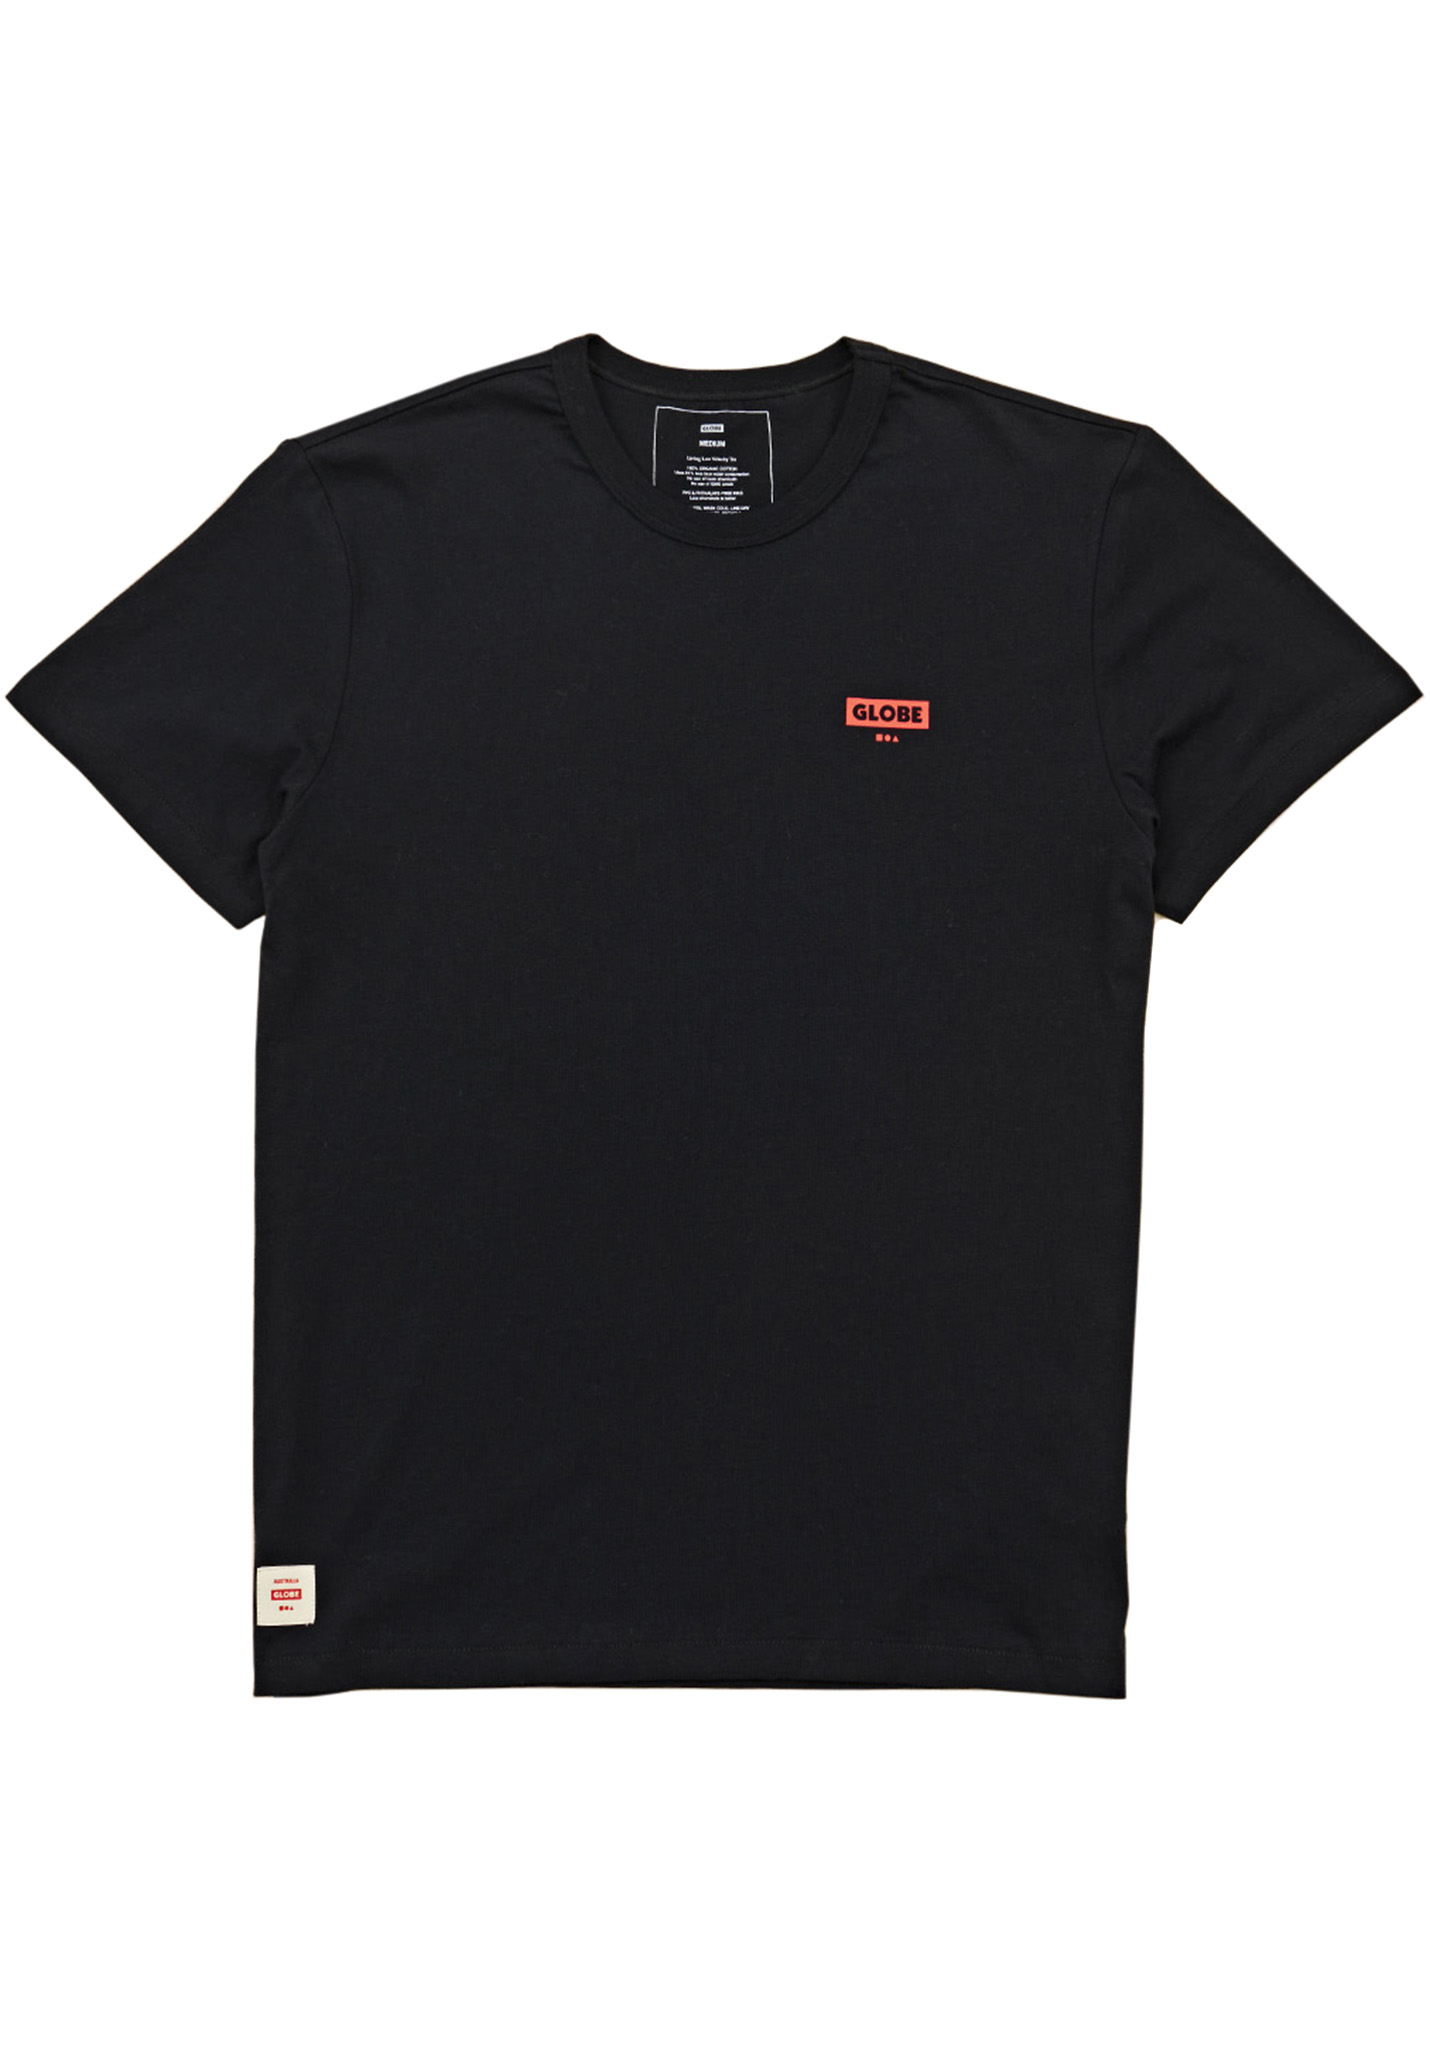 Globe Living Low Velocity T-Shirt black XL